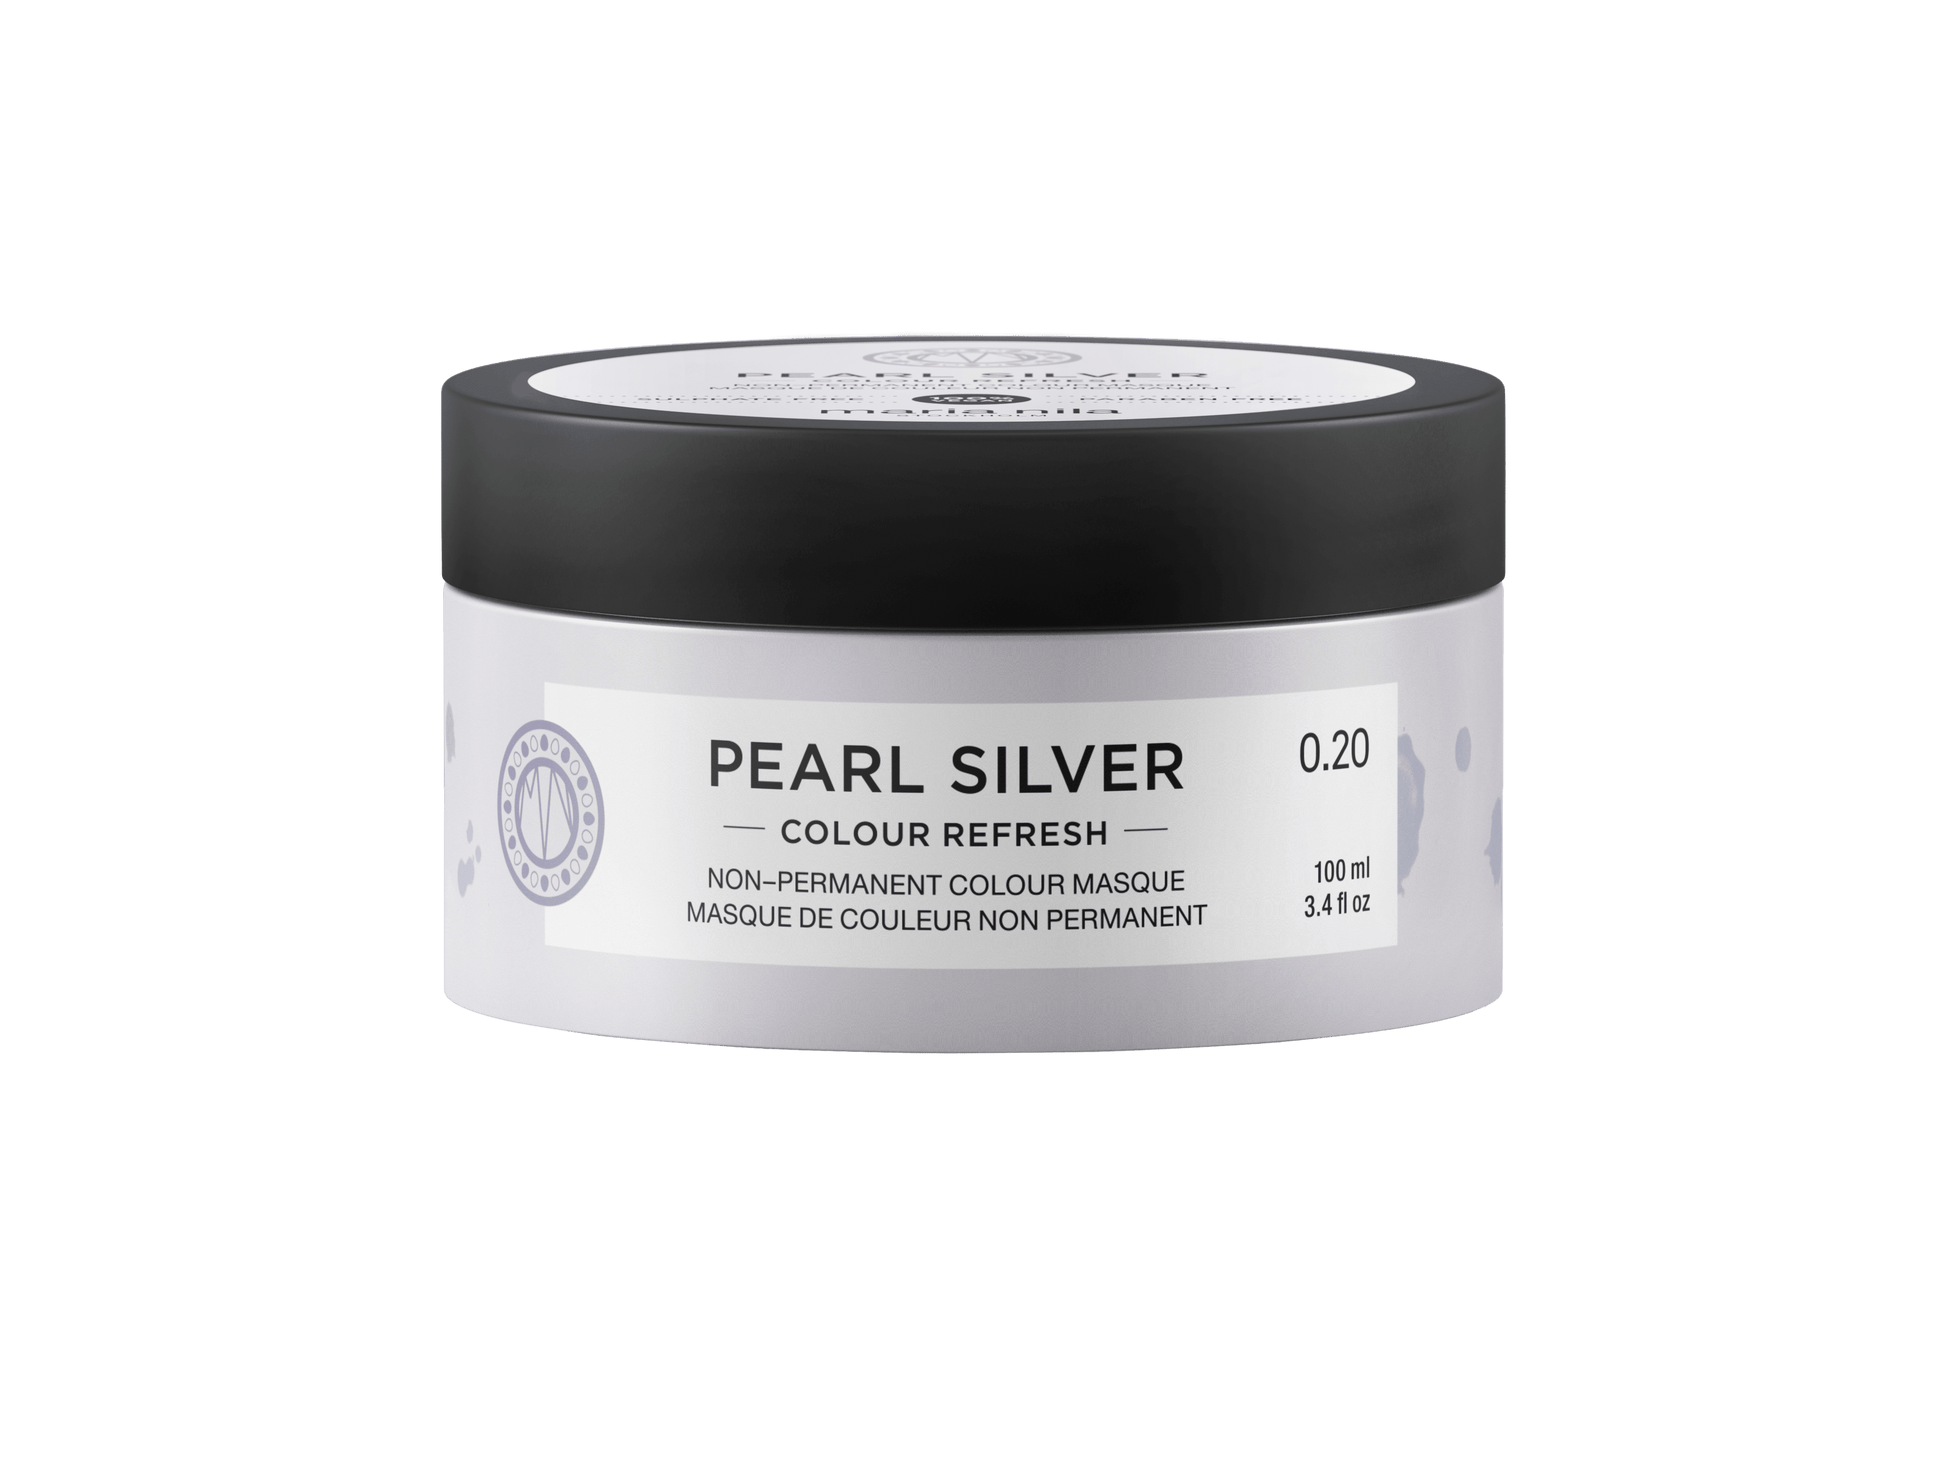 Colour Refresh Pearl Silver - The Coloroom 